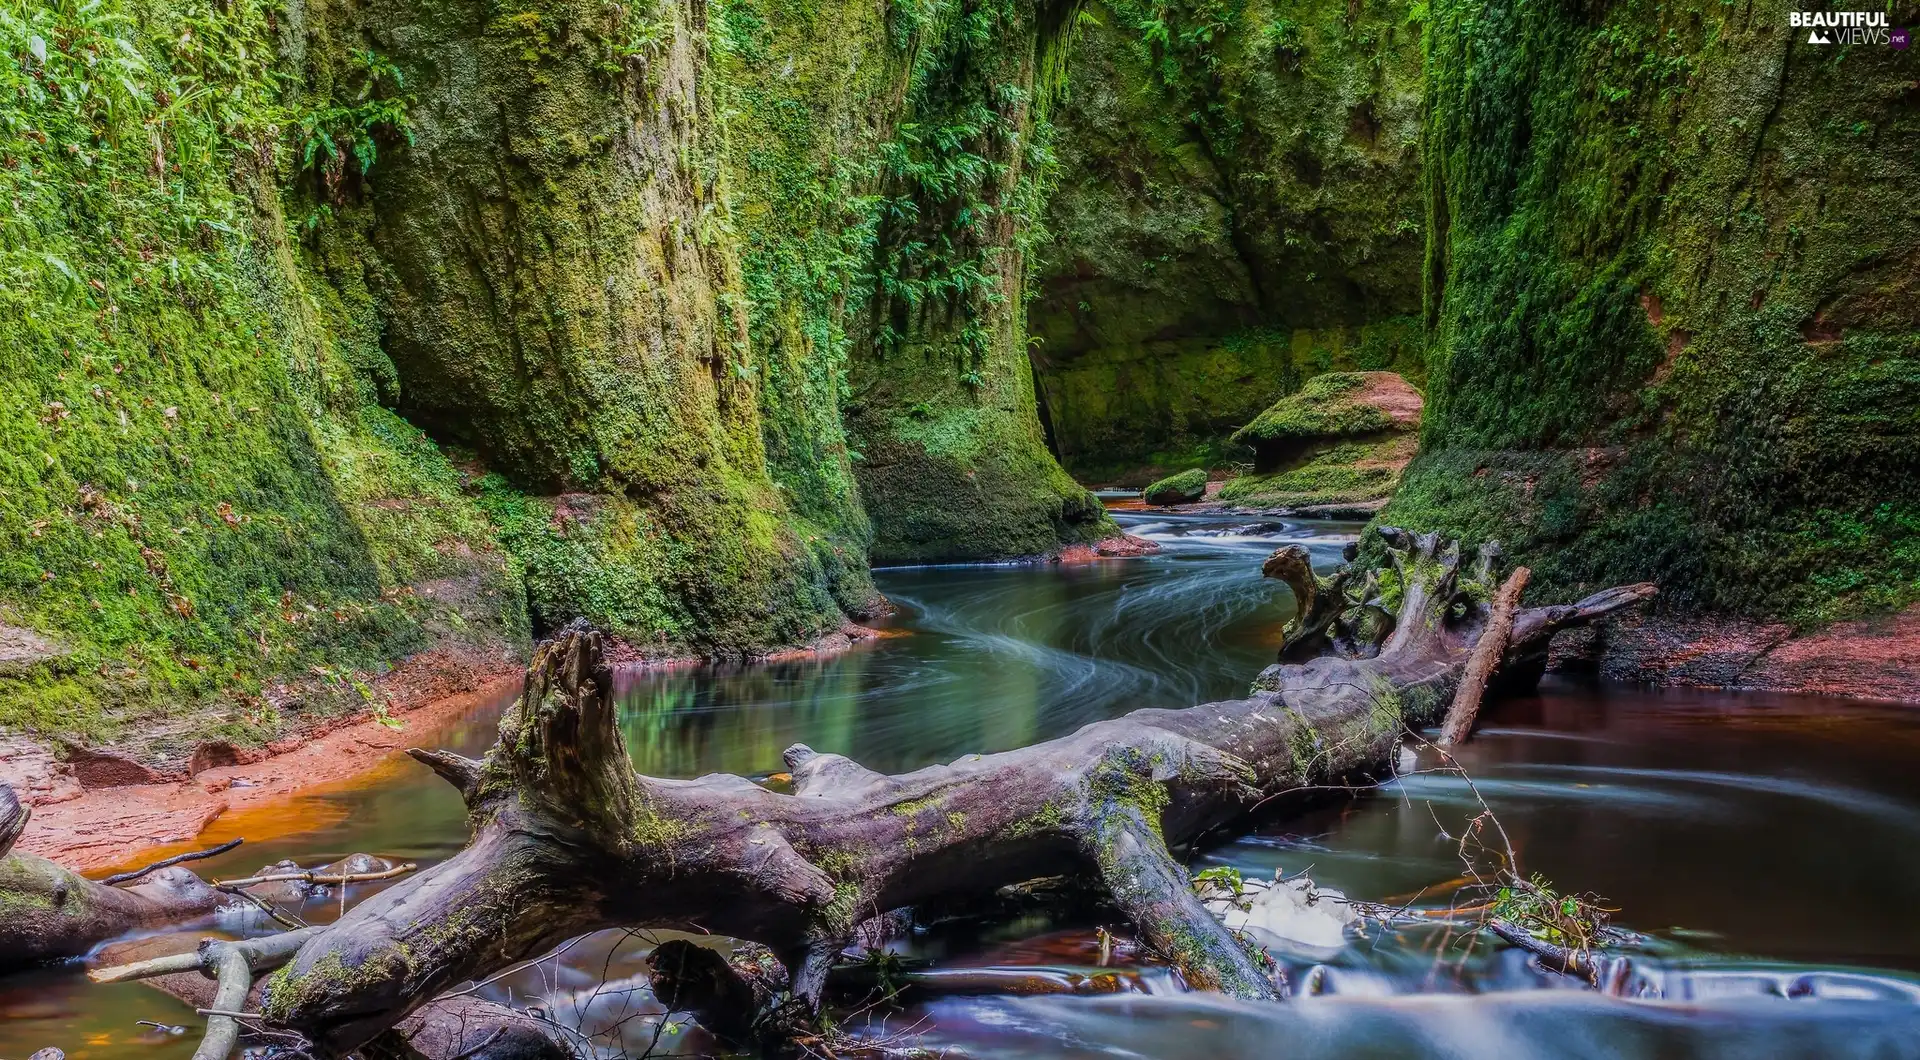 Carnock Burn River, Finnich Glen, trunk, rocks, Scotland, withered, green